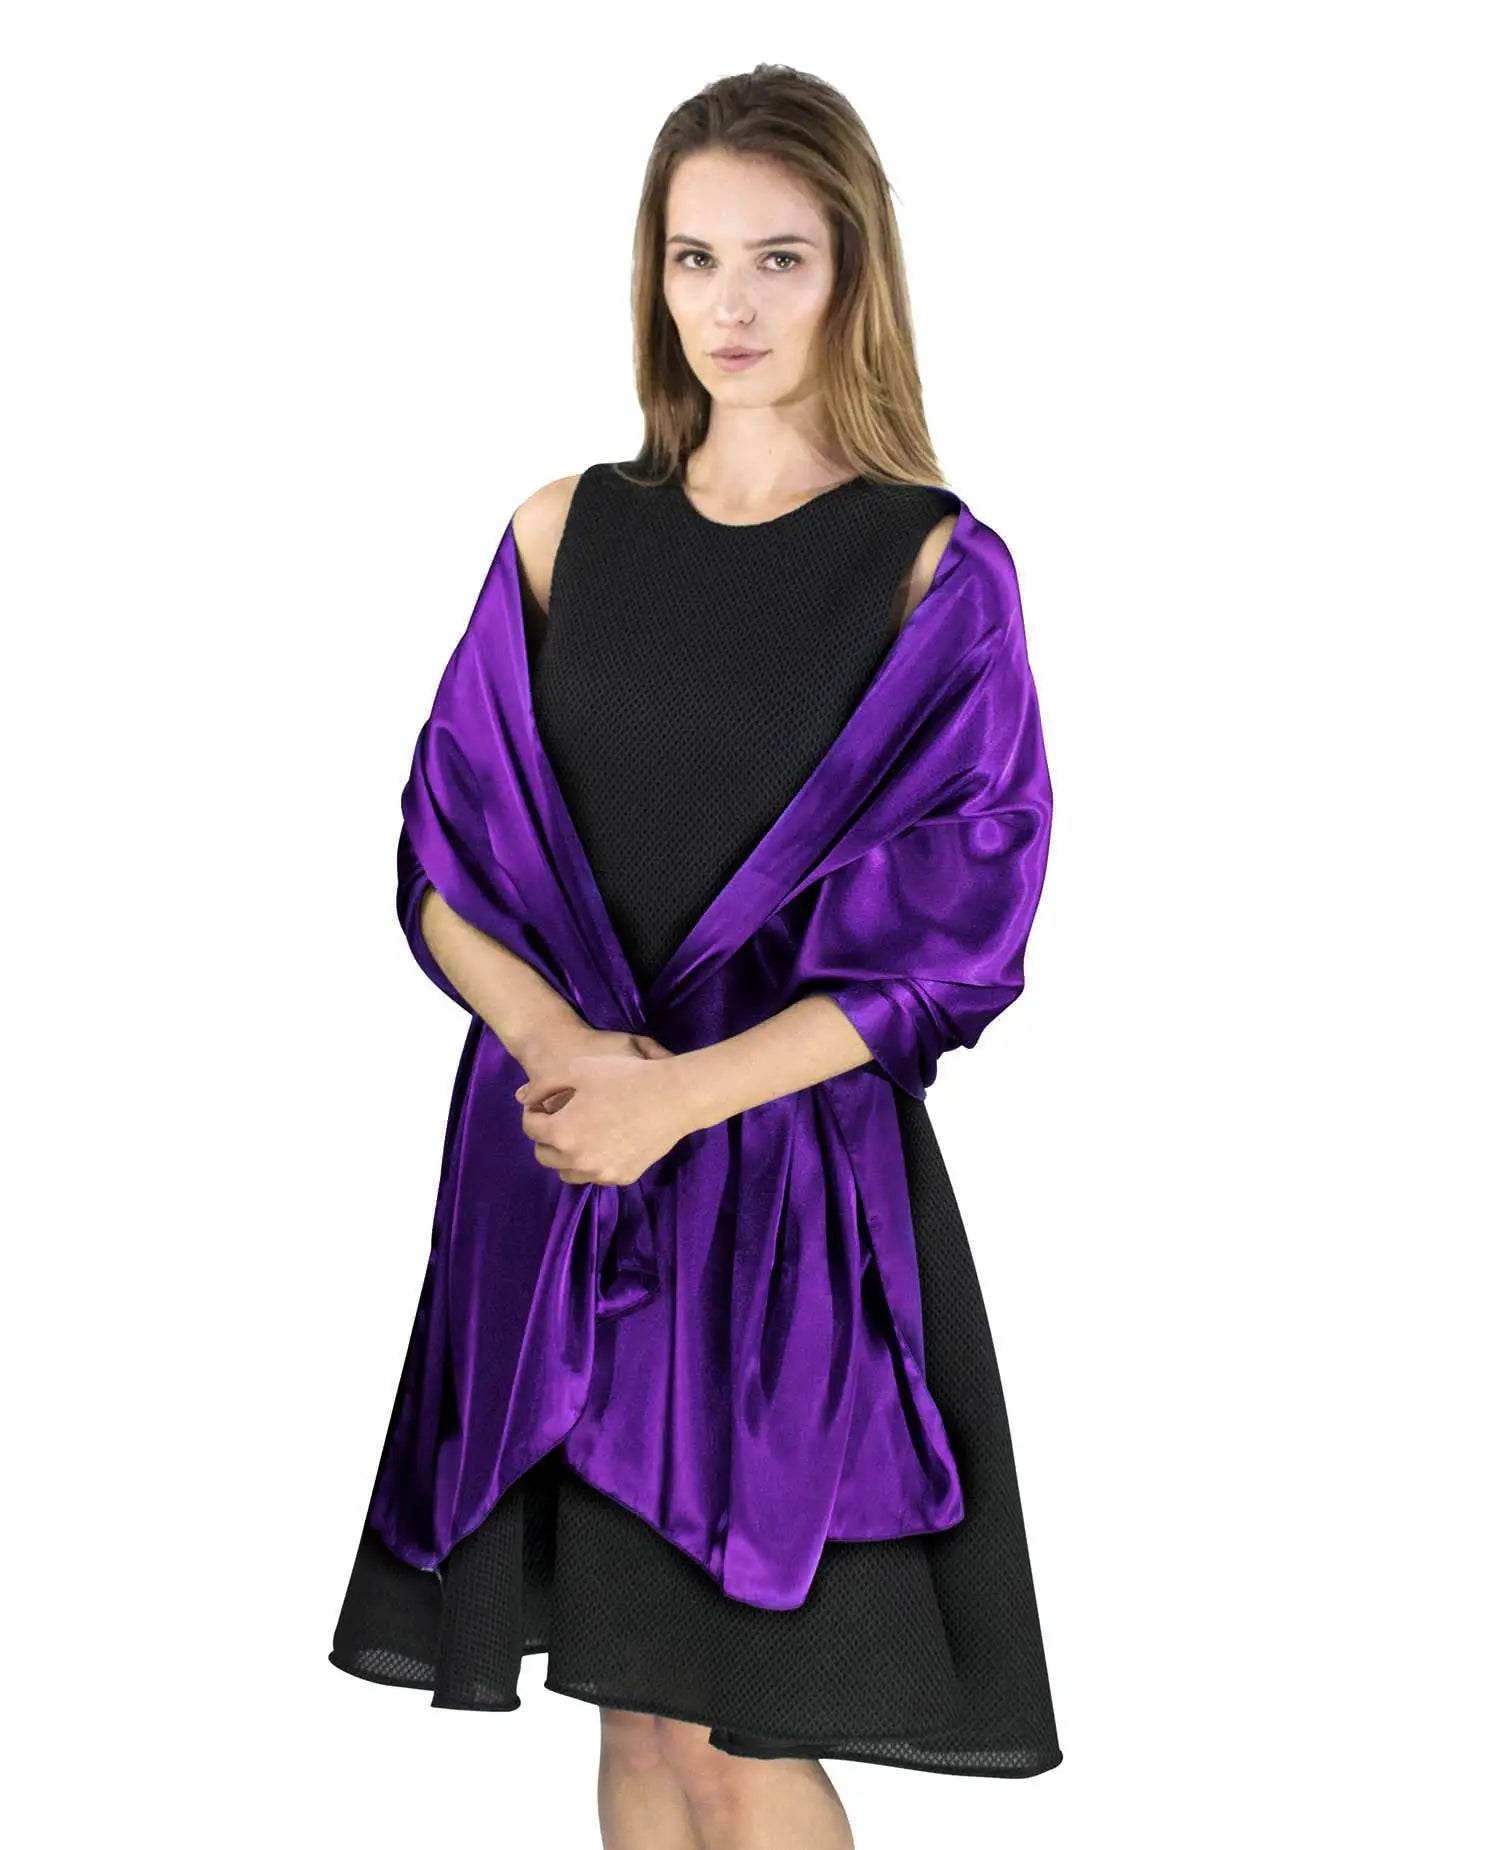 Woman wearing elegant satin evening shawl in purple and black dress